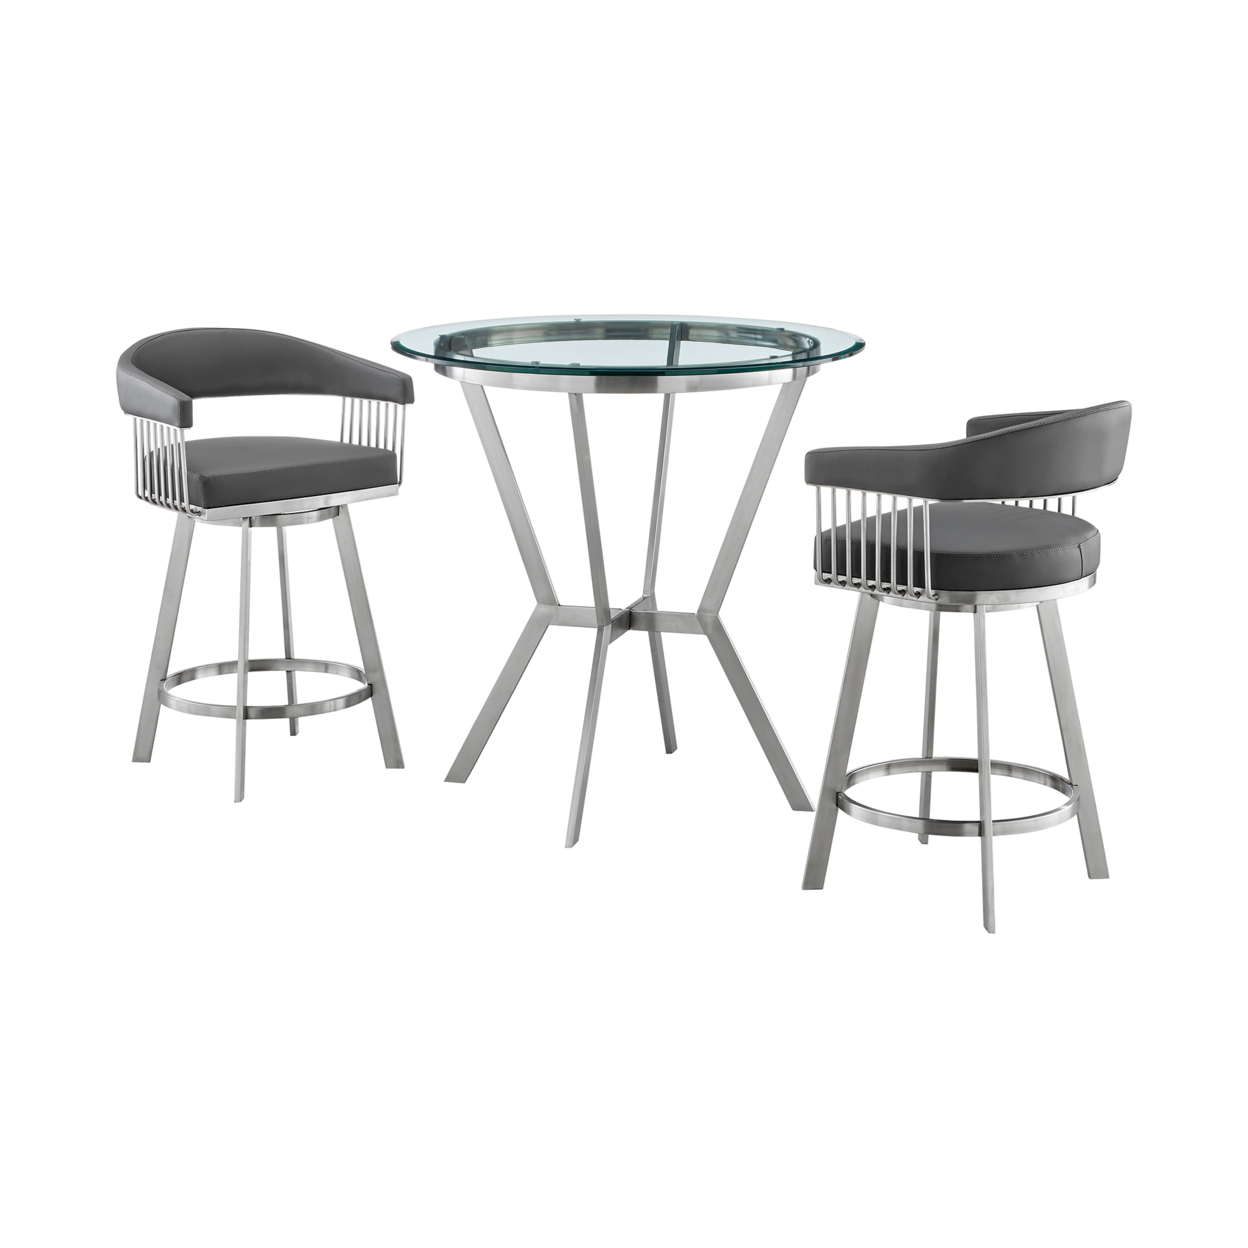 Mia 3 Piece Counter Height Dining Table Set, Round Glass Top, Chrome, Gray- Saltoro Sherpi